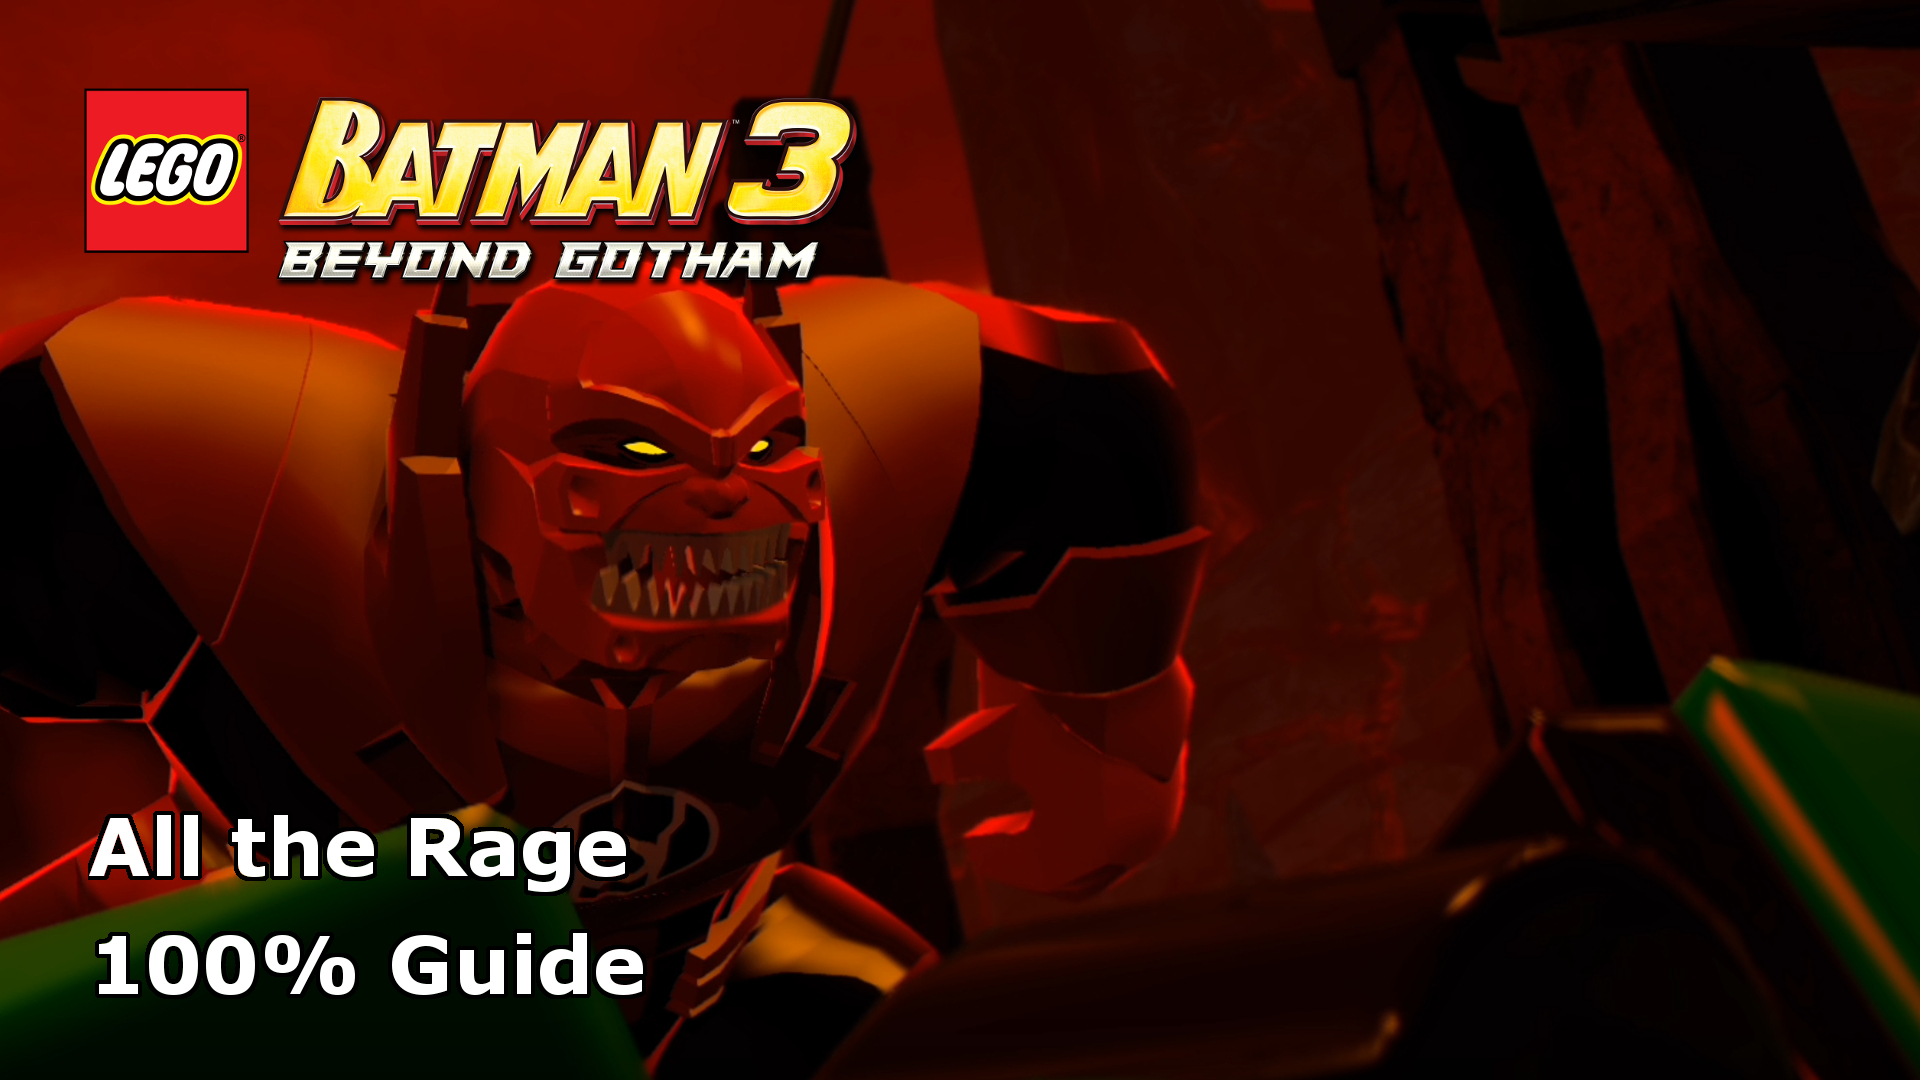 lego-batman-3-beyond-gotham-3ds-nerd-bacon-magazine